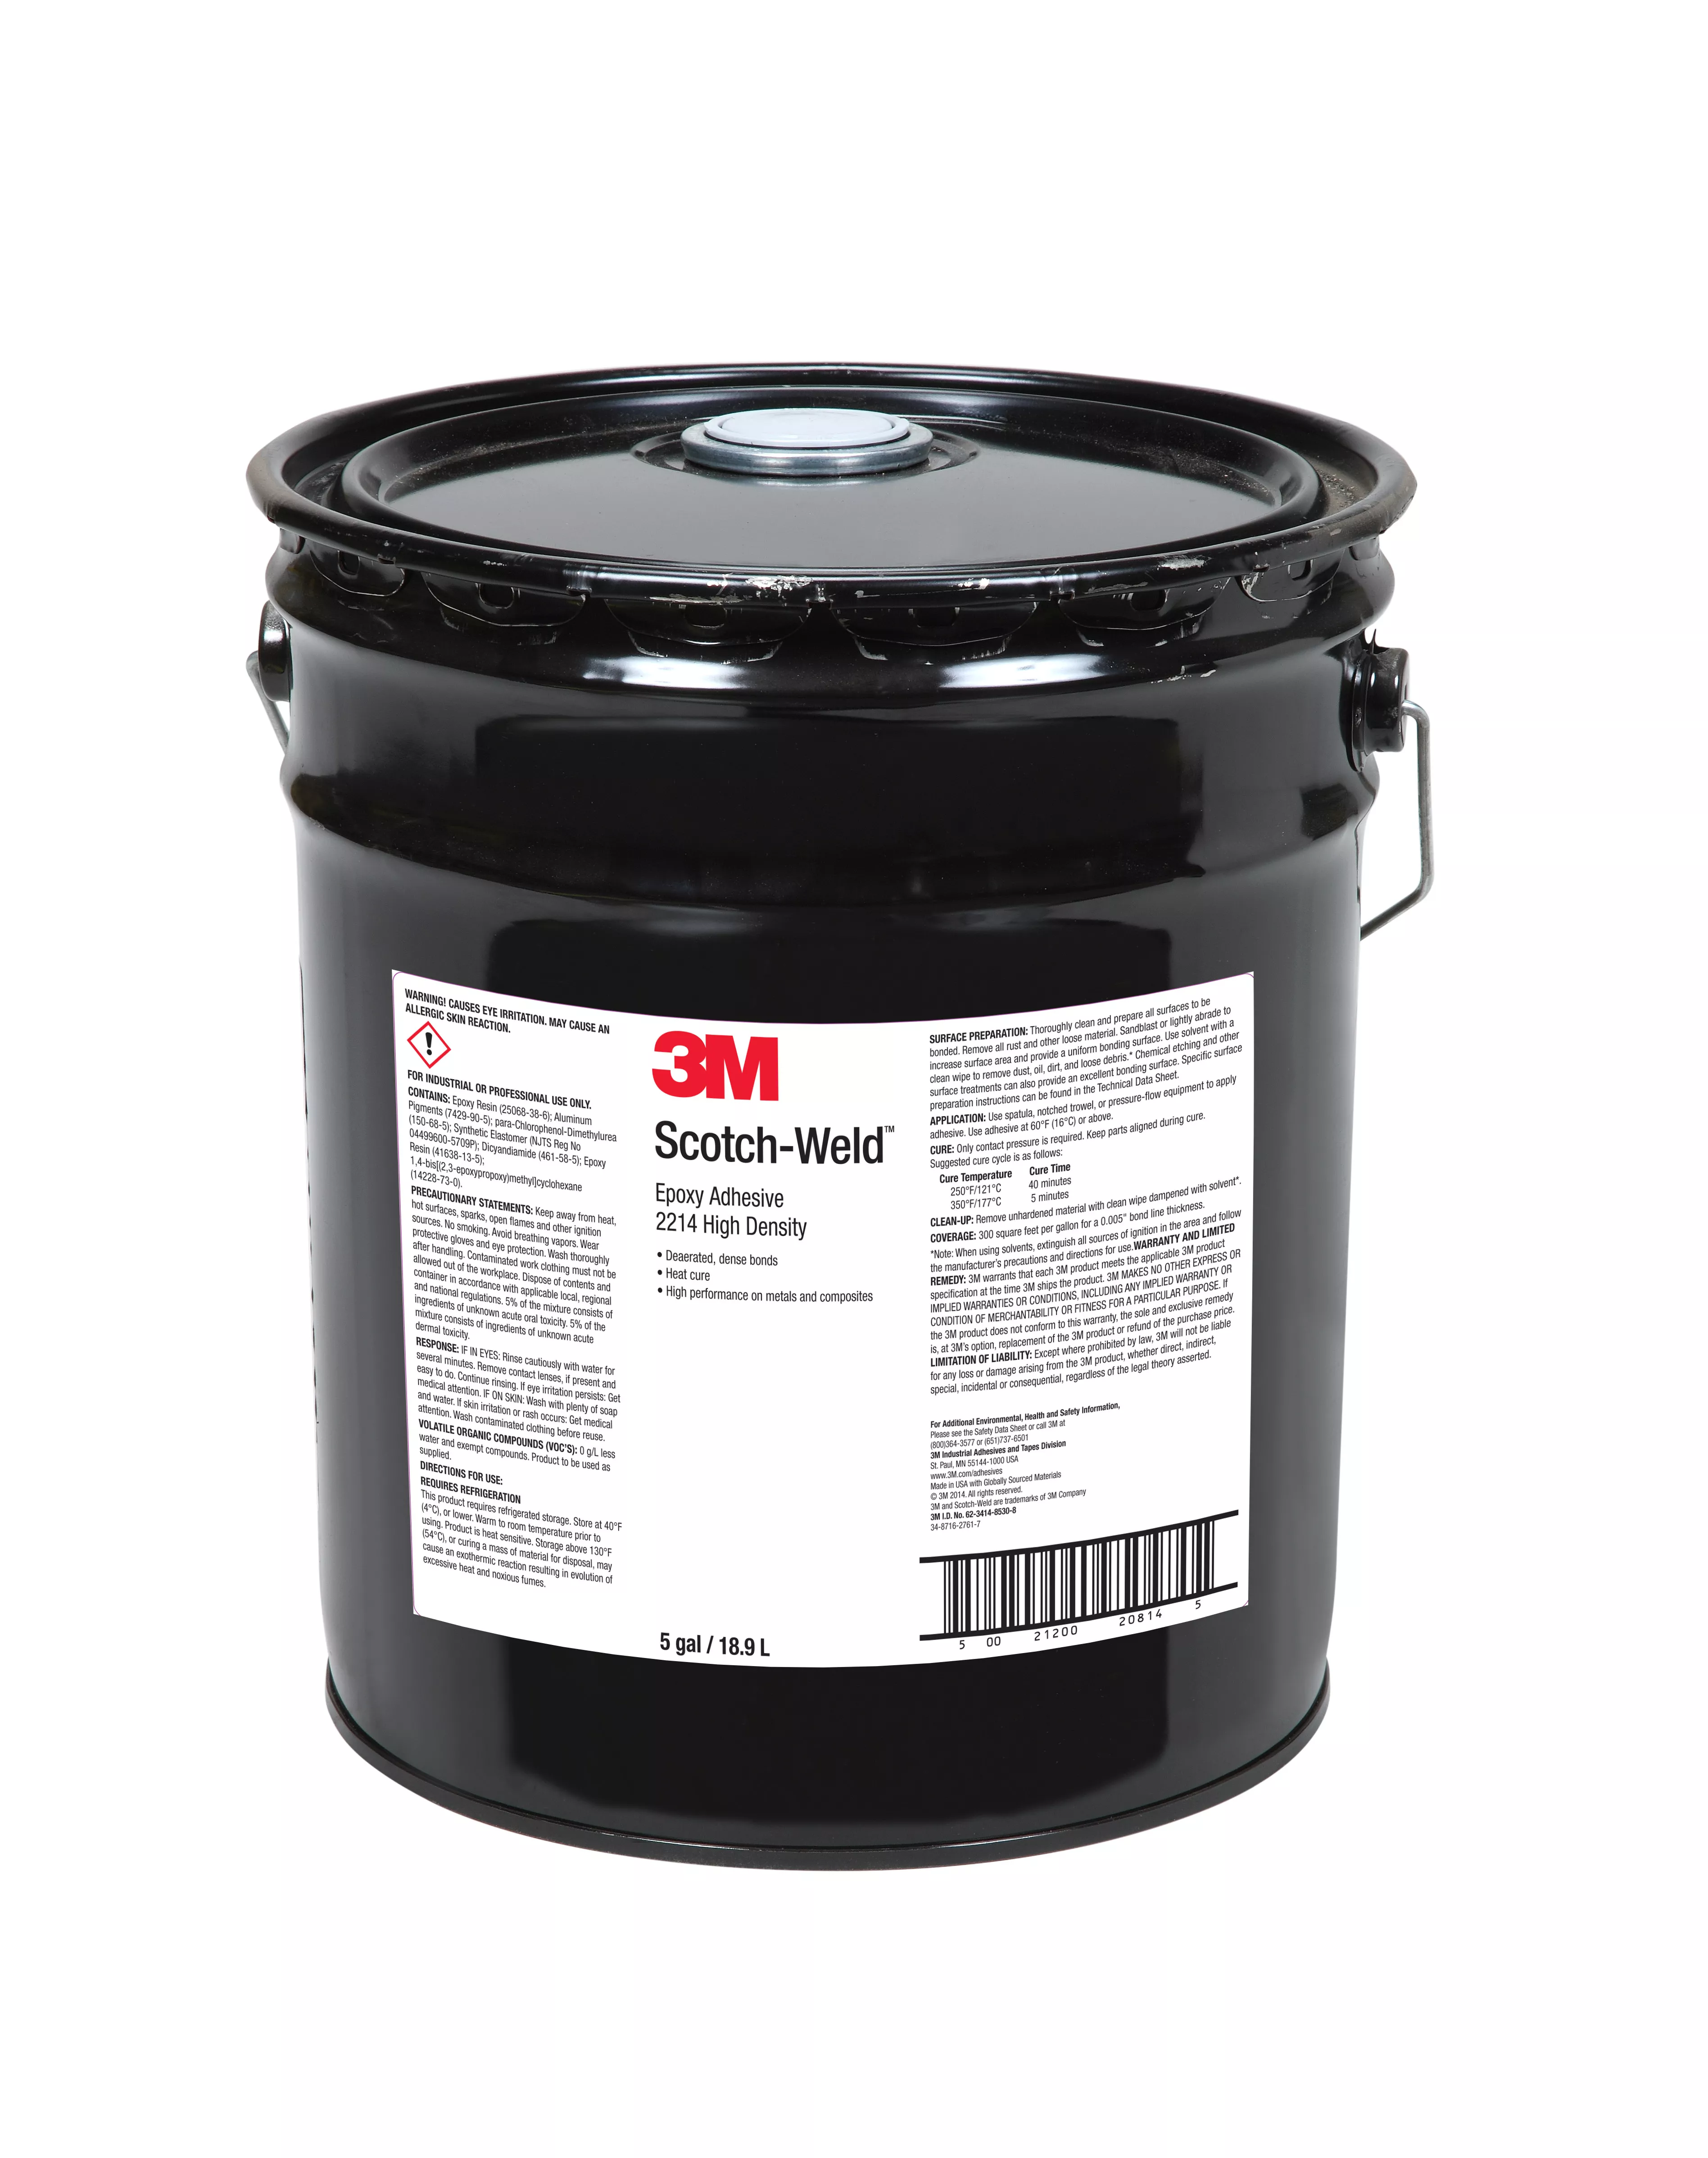 3M™ Scotch-Weld™ Epoxy Adhesive 2214, Hi-Density, Gray, 5 Gallon (Pail),
Drum